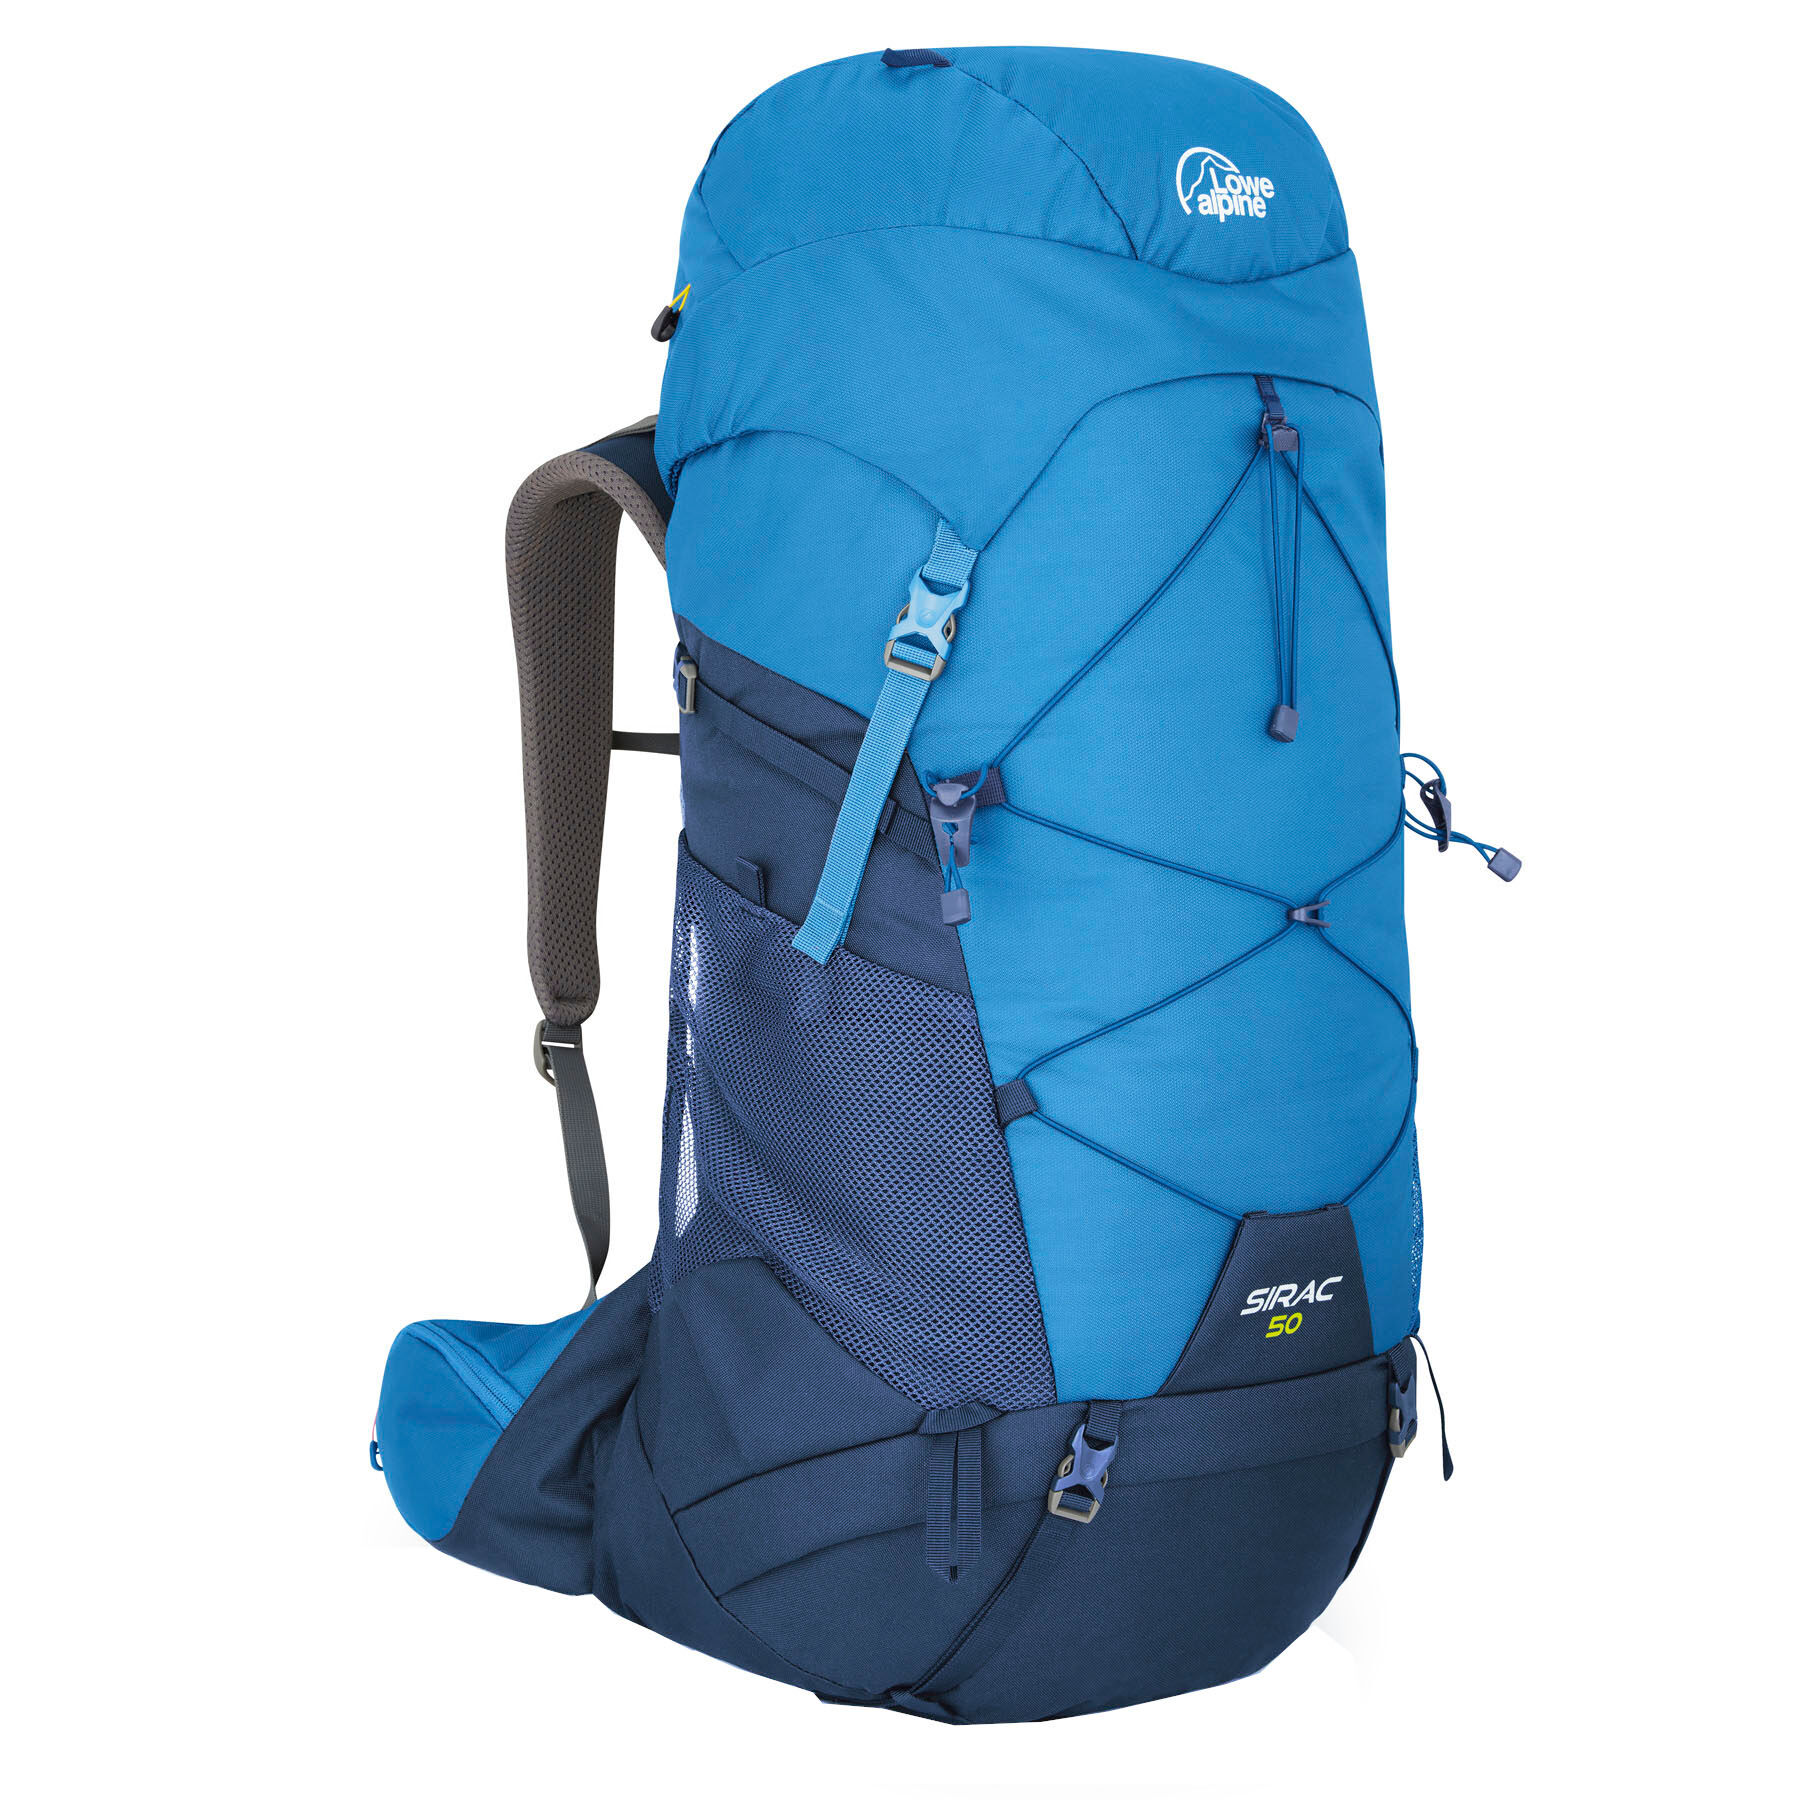 Lowe Alpine Sirac 50 - Walking backpack - Men's